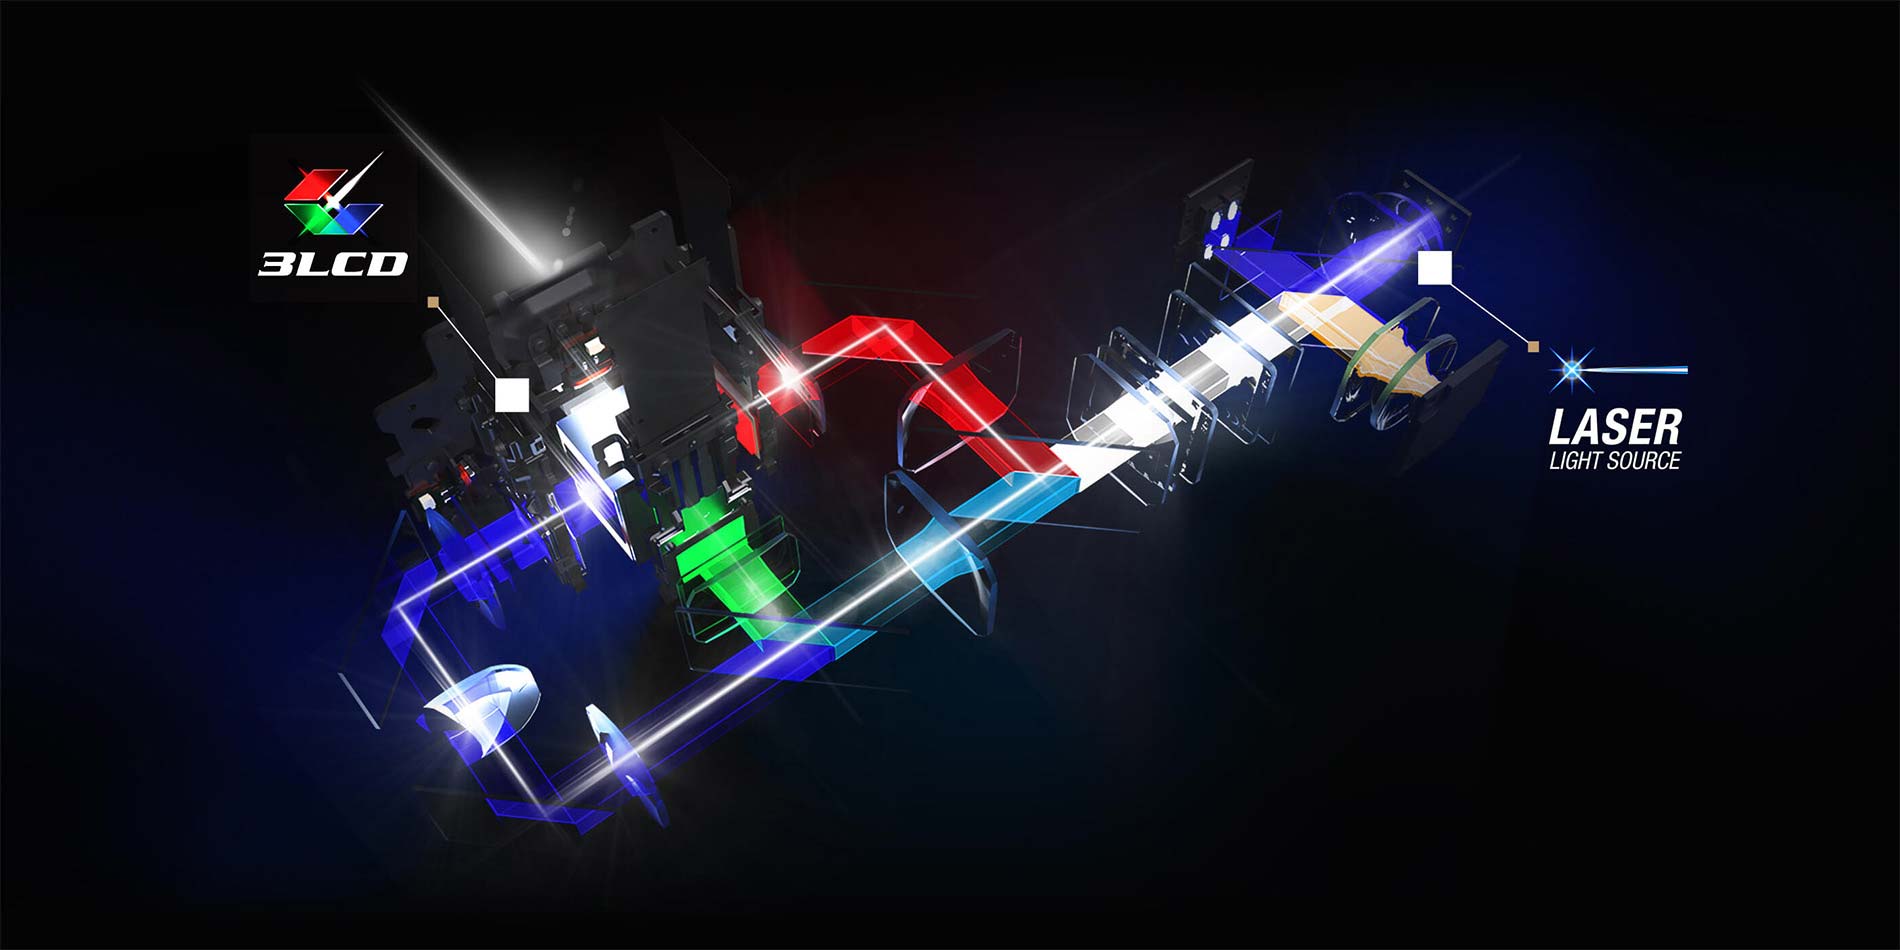 3LCD | Laser Light Source